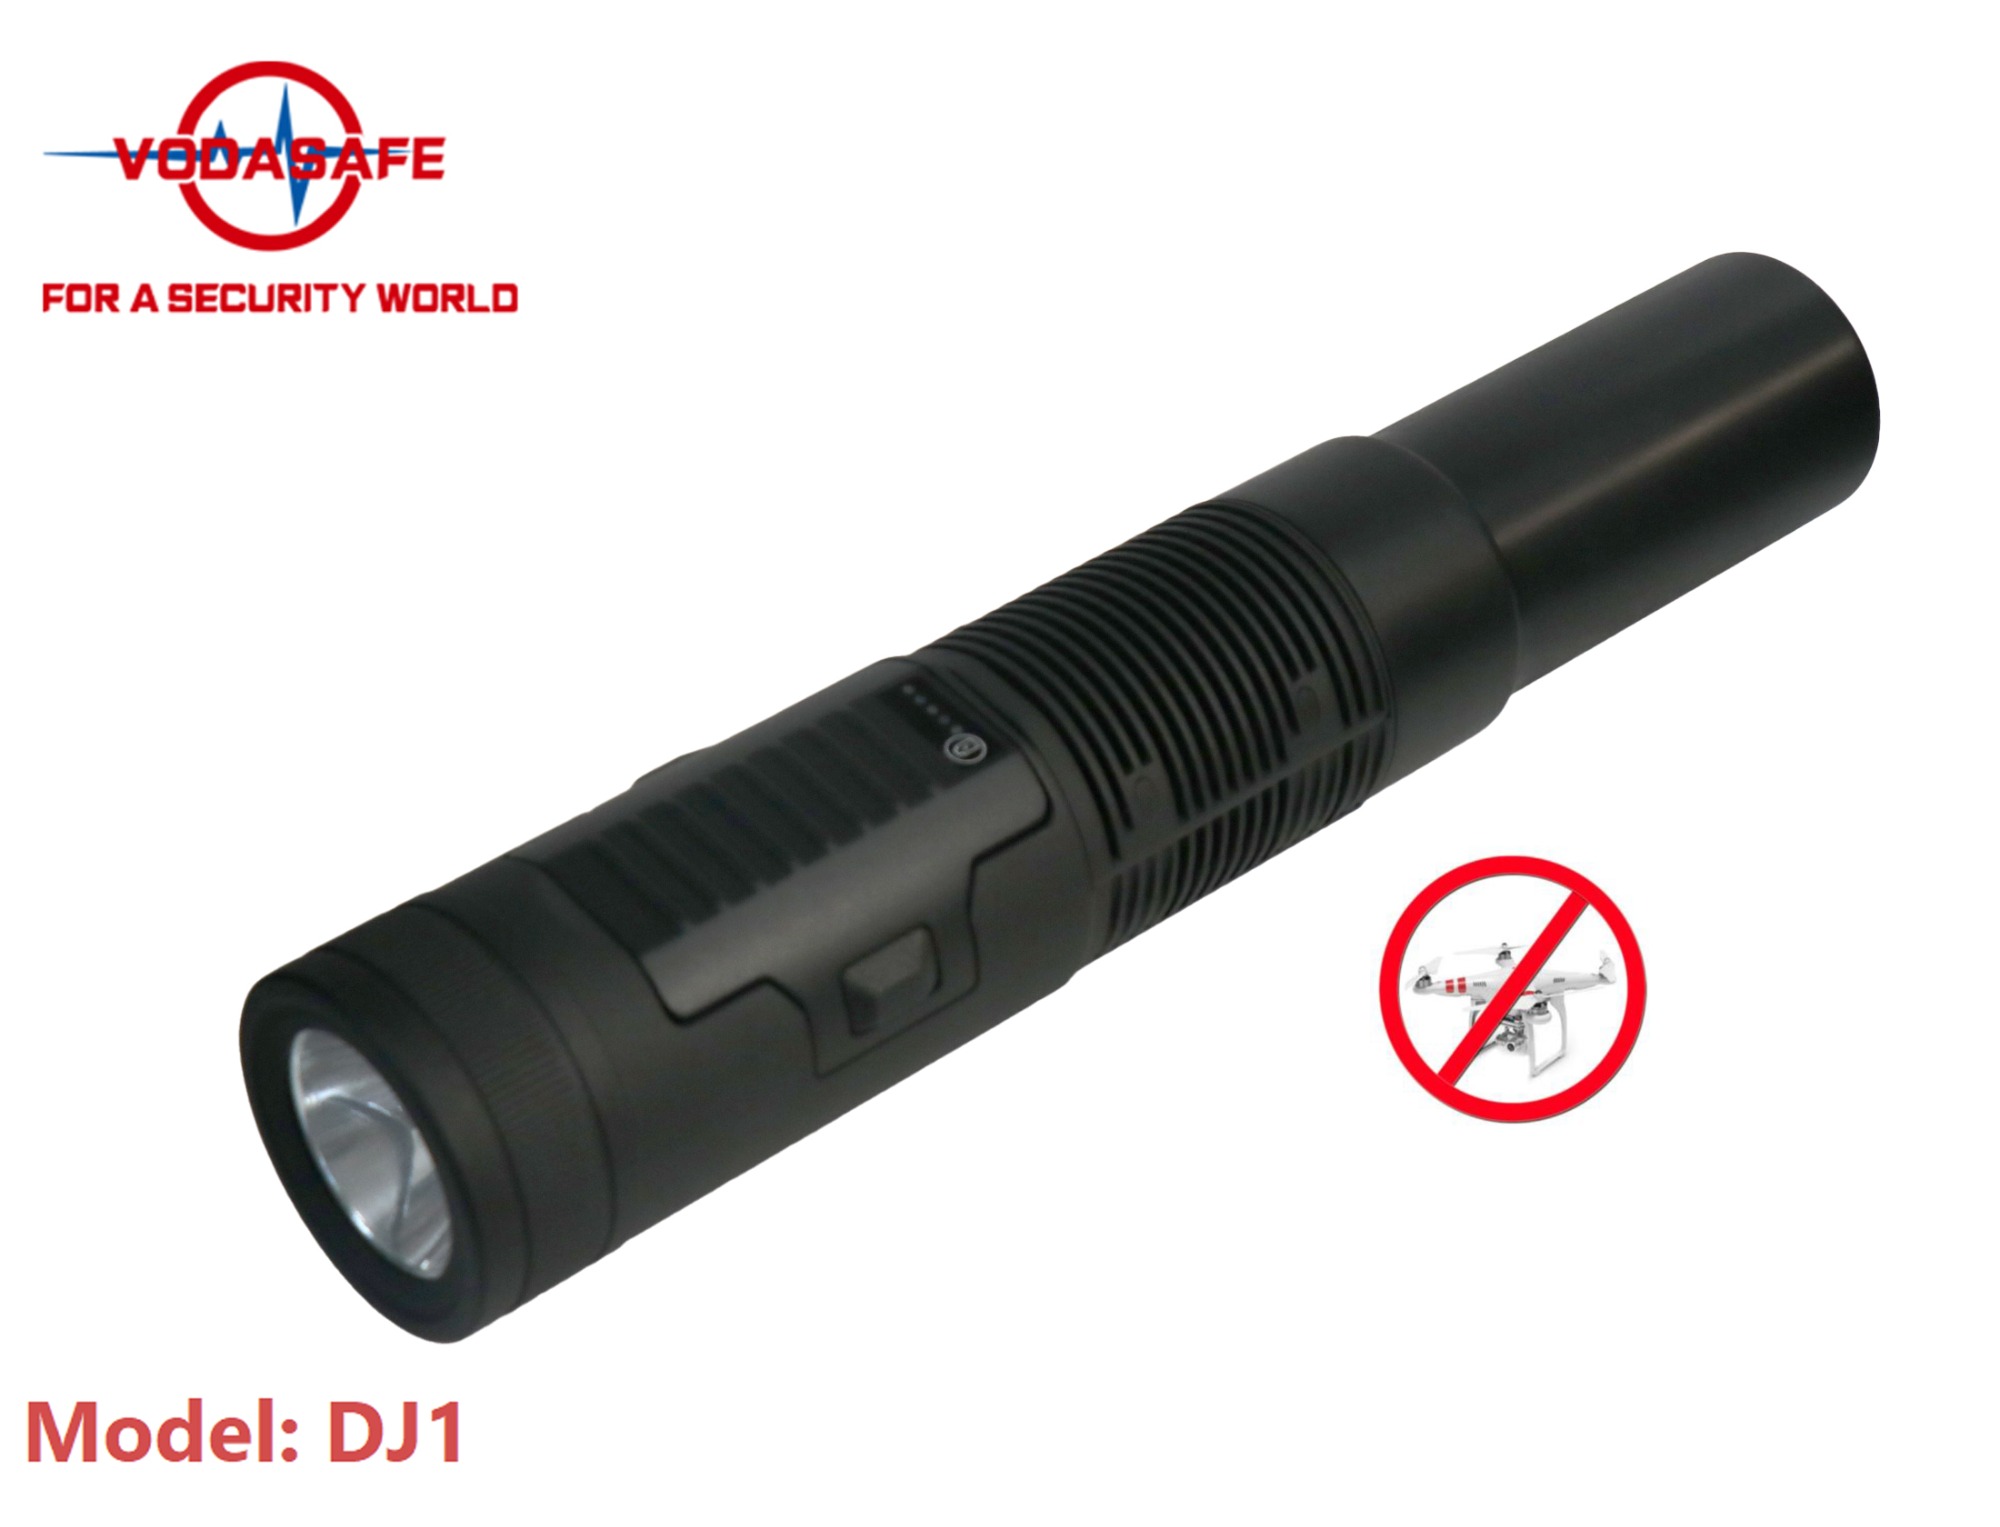 vodasafe Portable flashlight drone Jammer DJ1